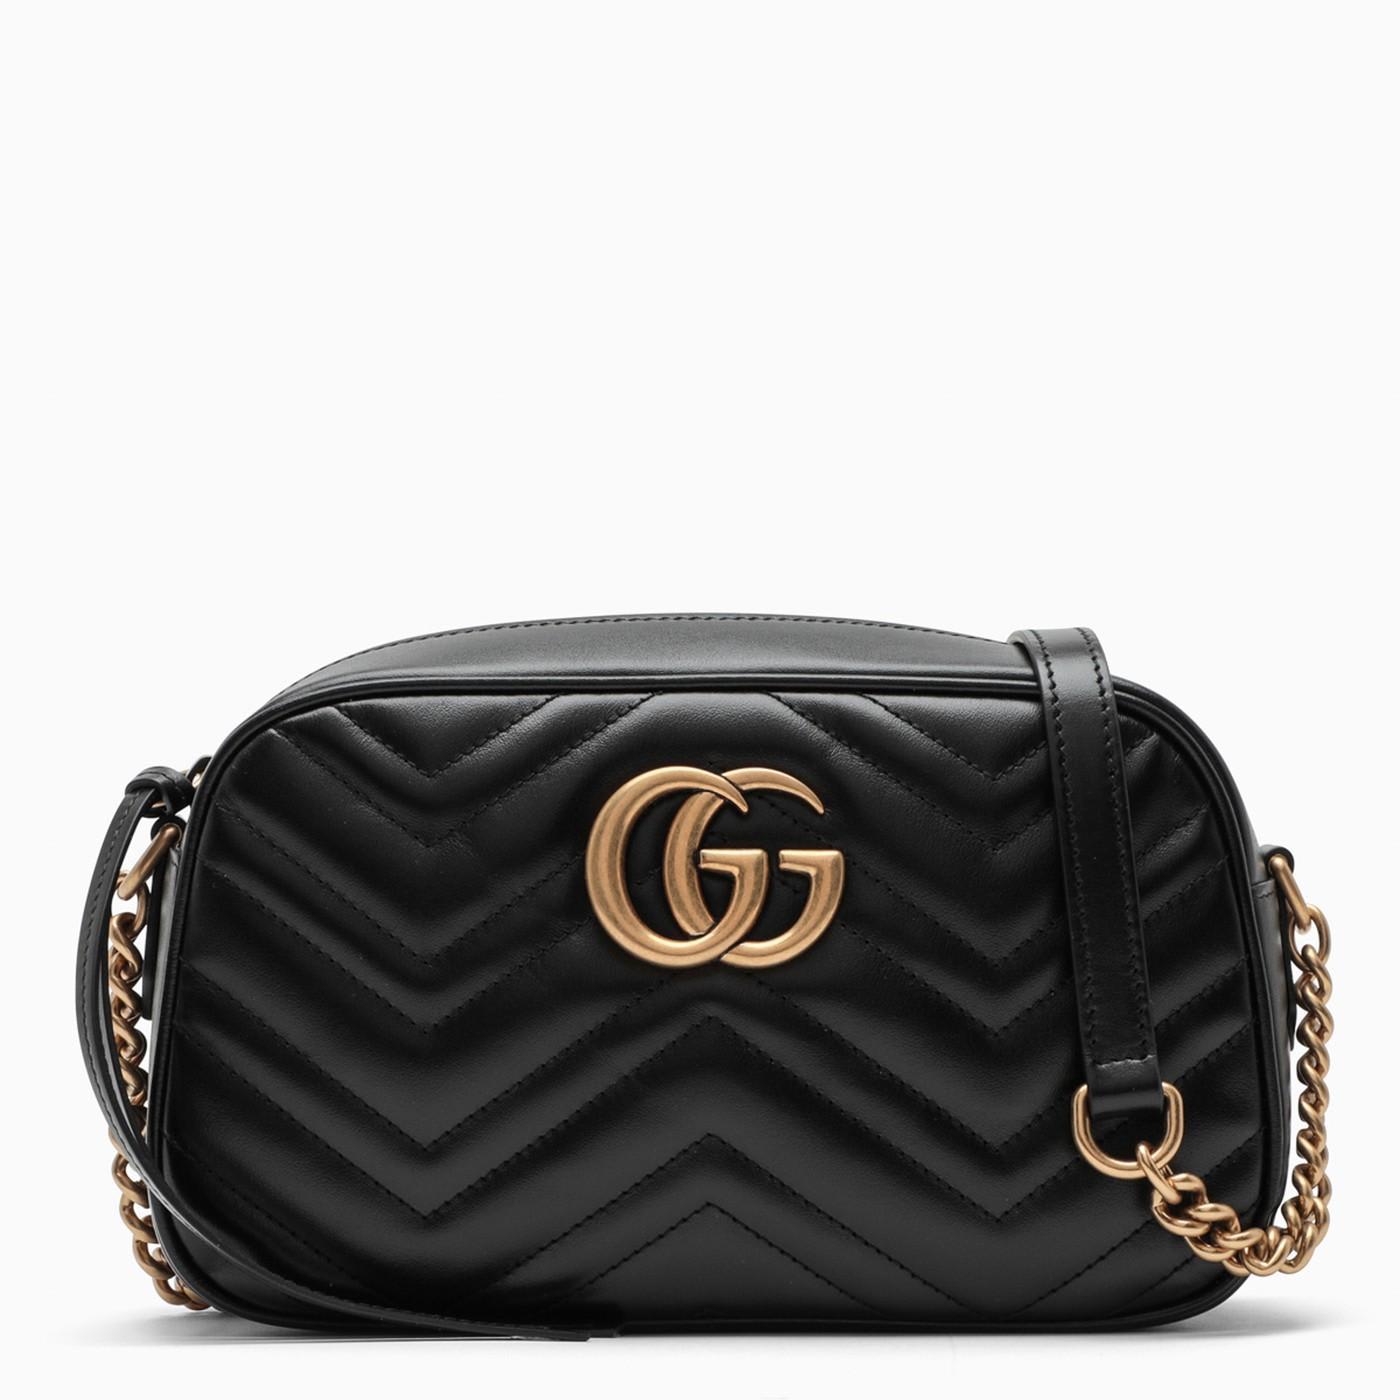 Gucci Small Matelassé Leather Bag